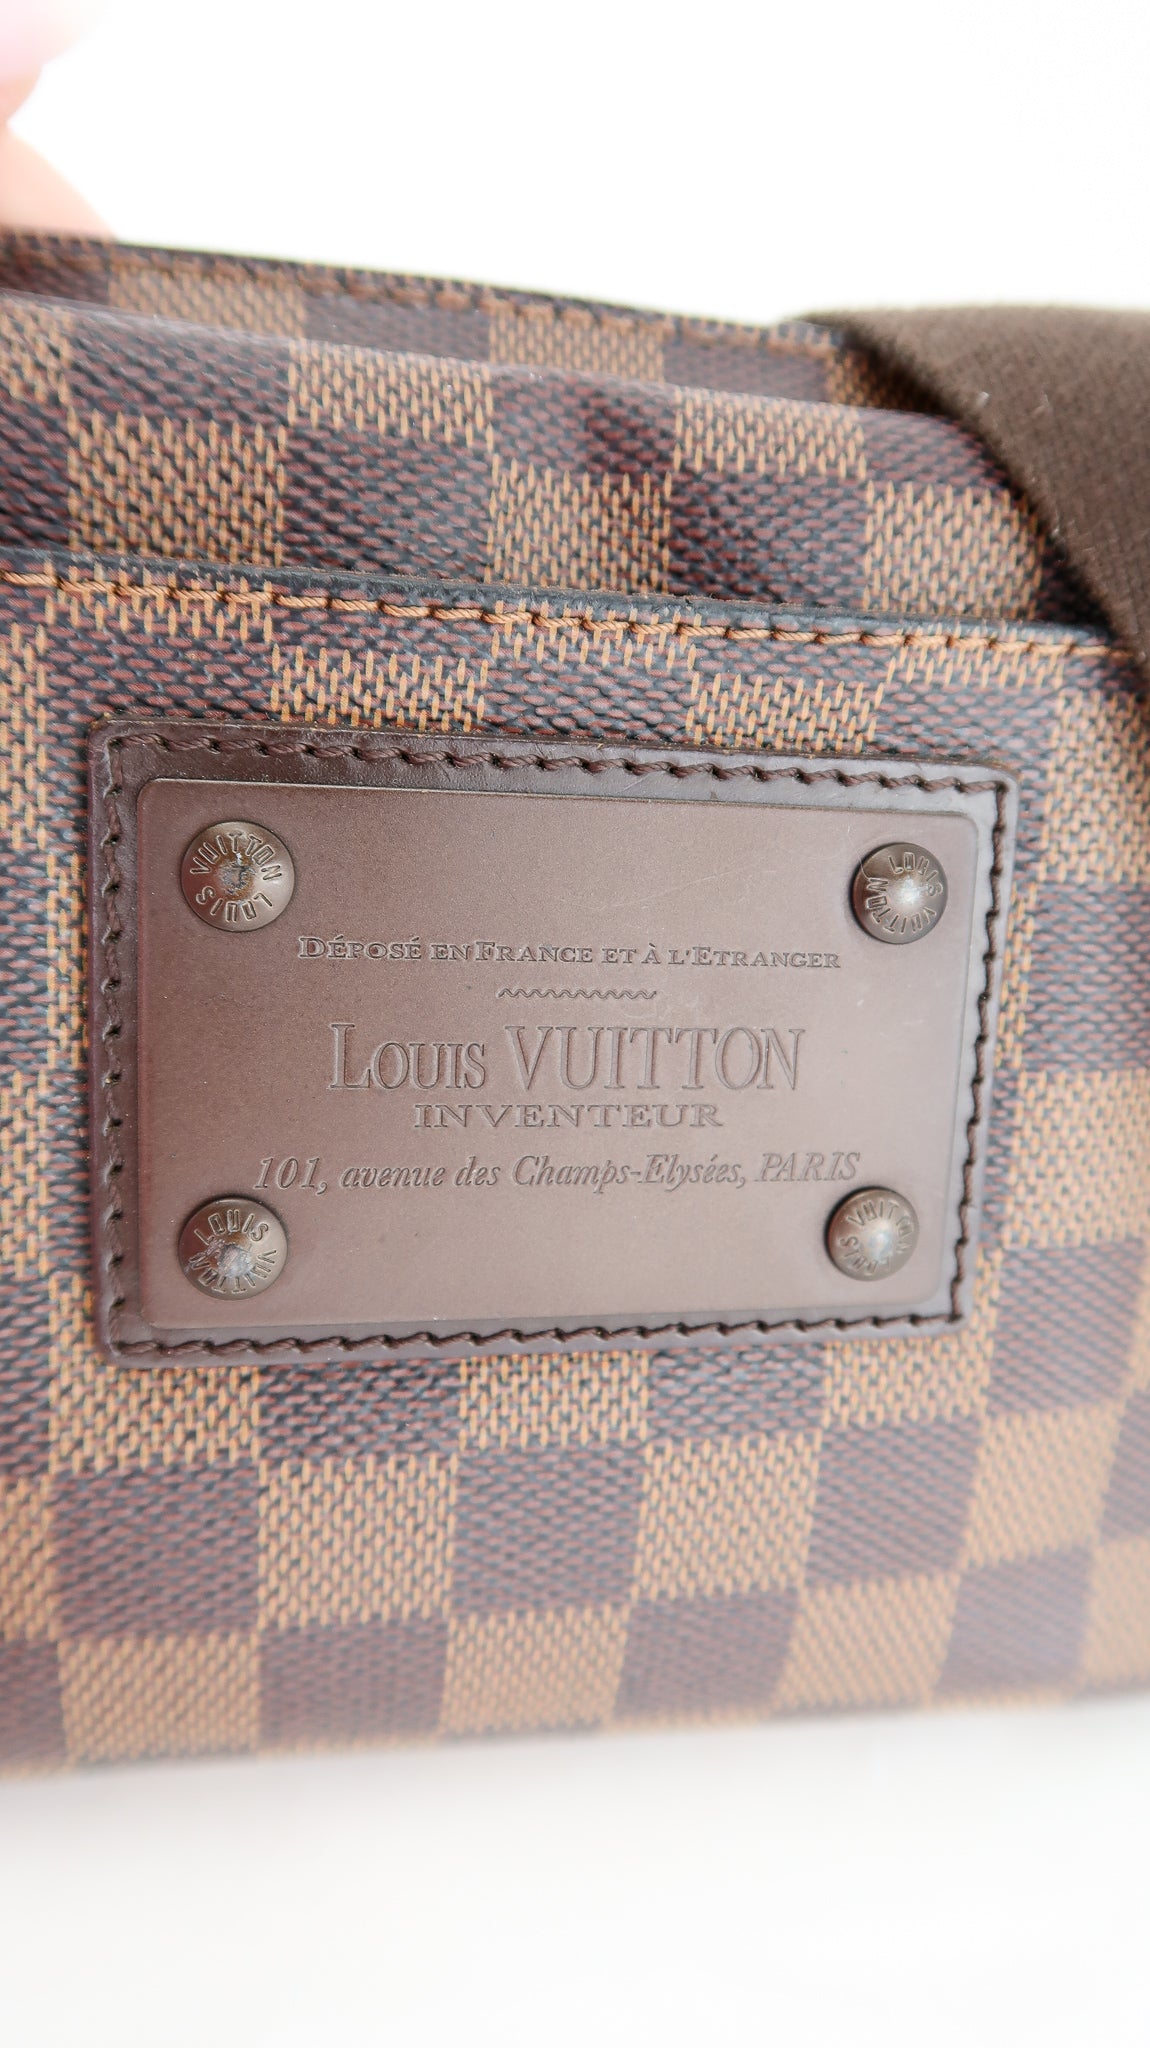 Louis Vuitton Damier Ebene Brooklyn Bum Bag 405129